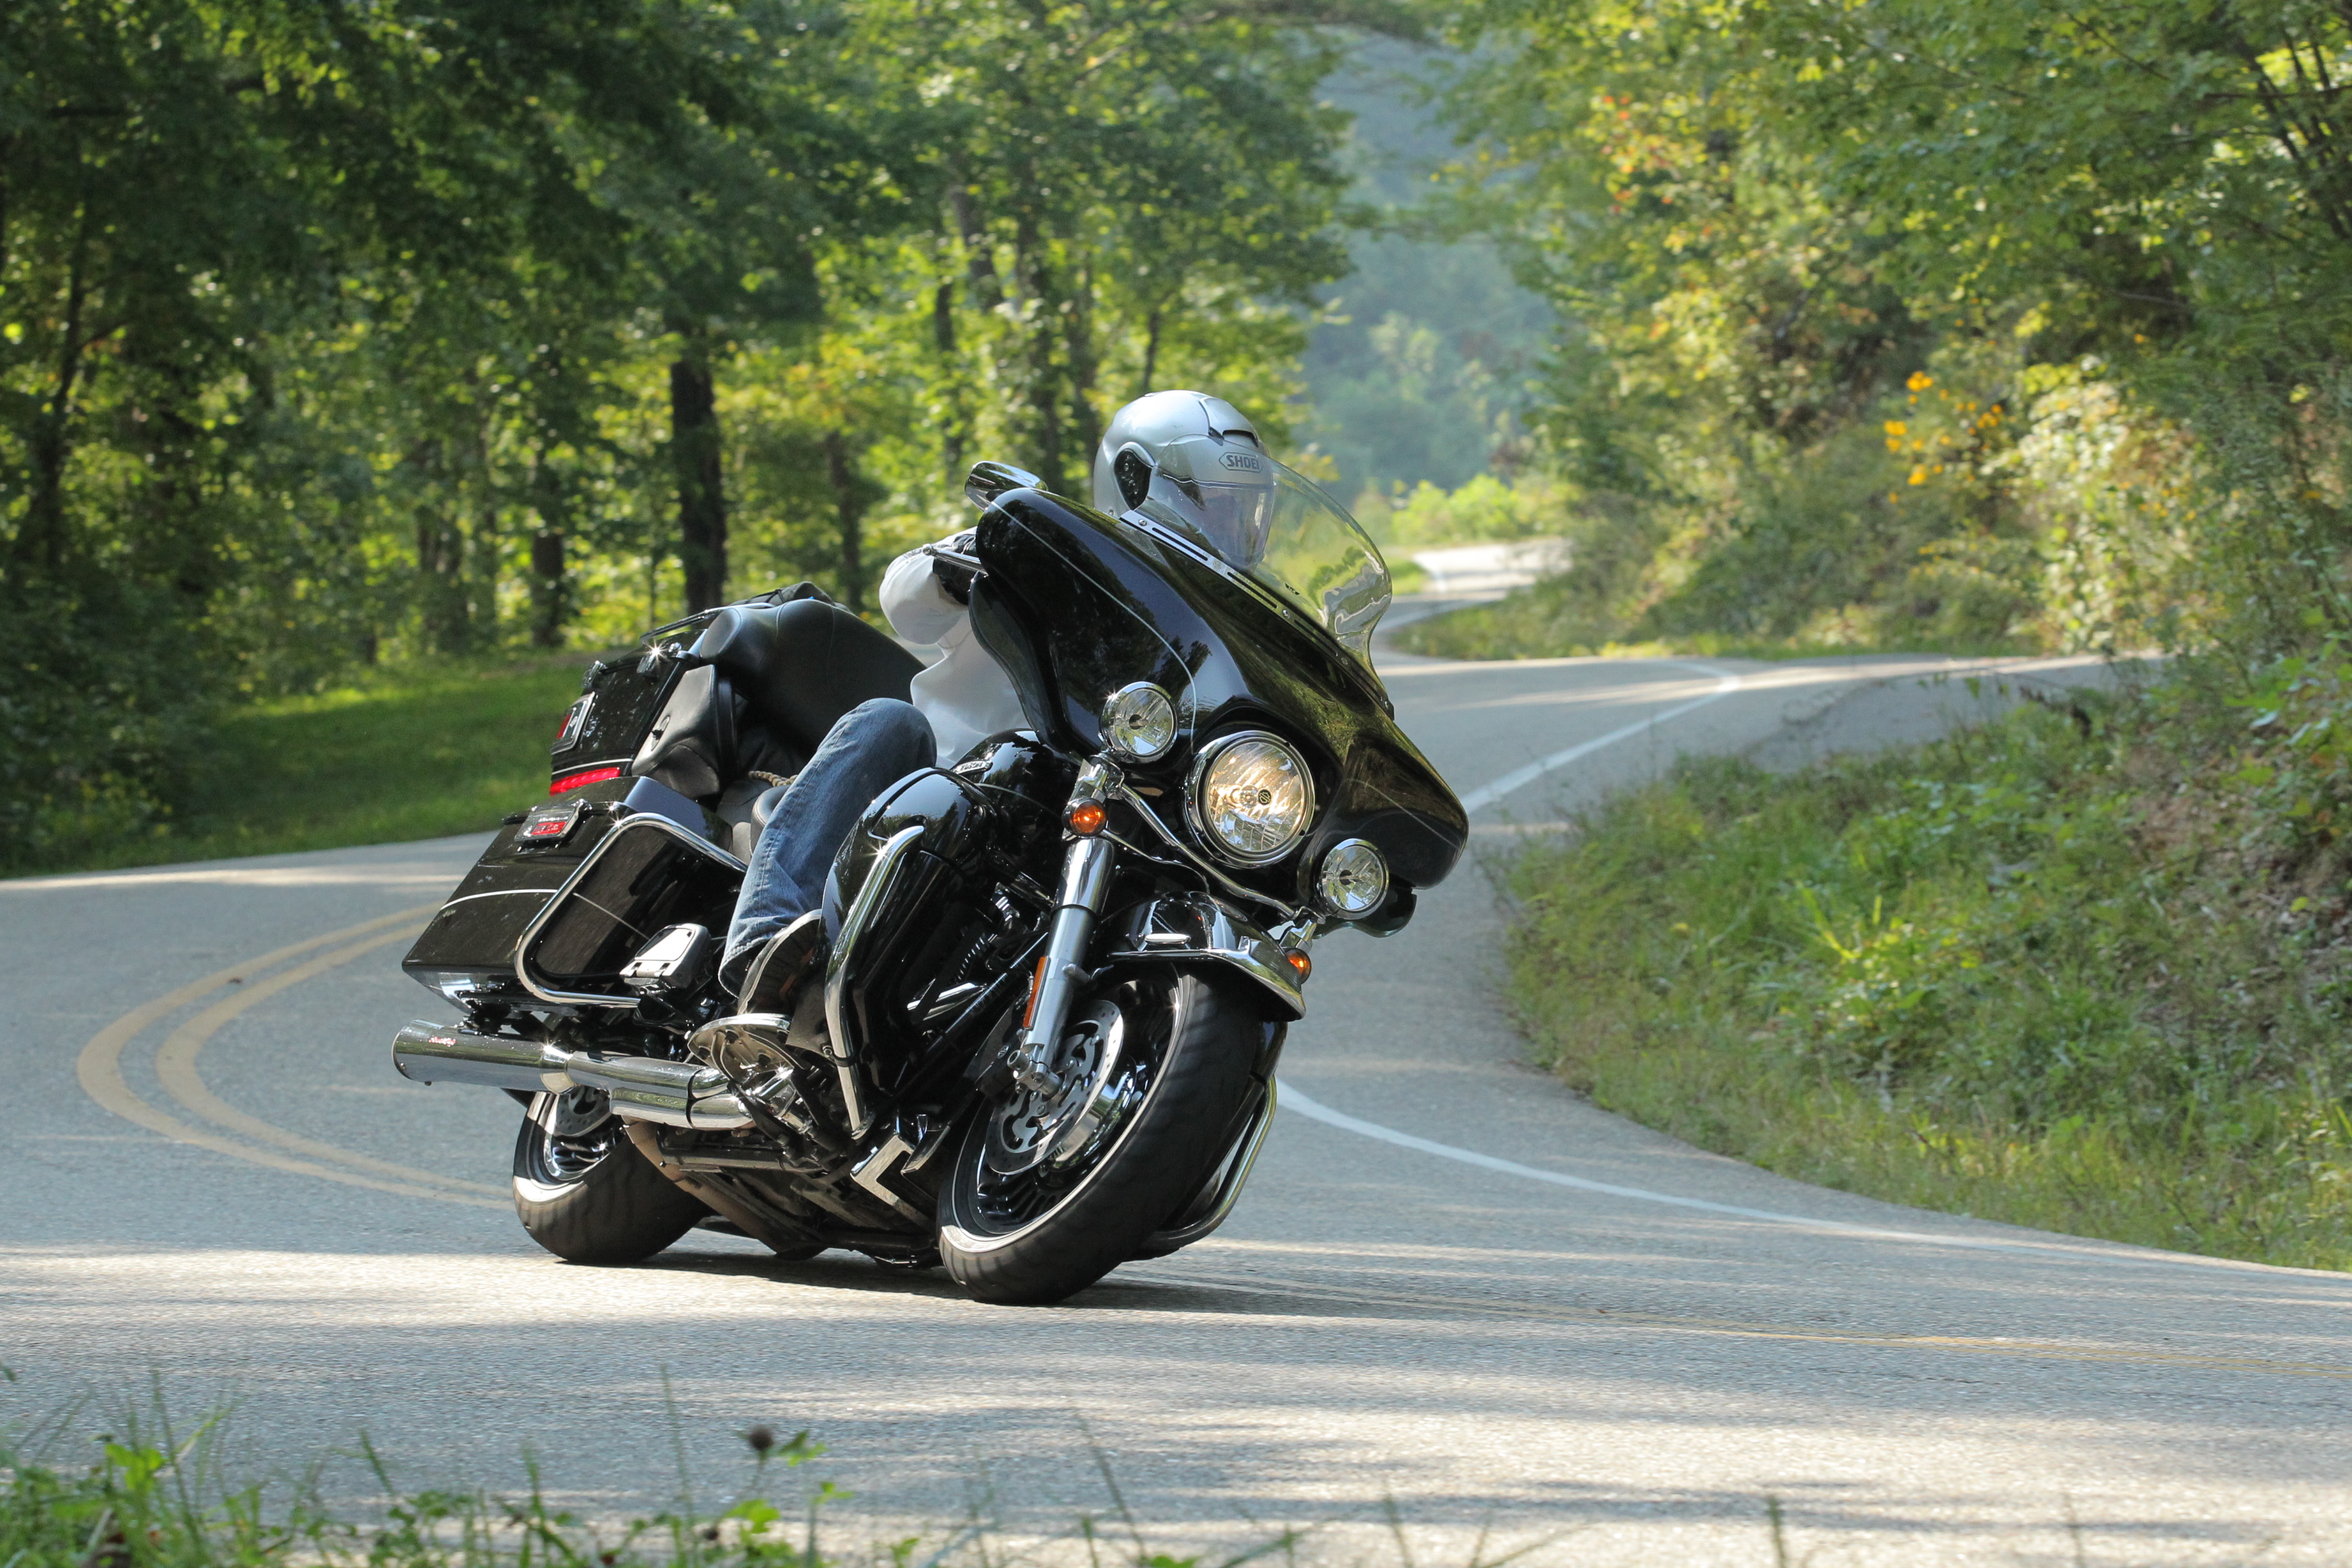 Dragon Photos - Page 2 - Harley Davidson Forums